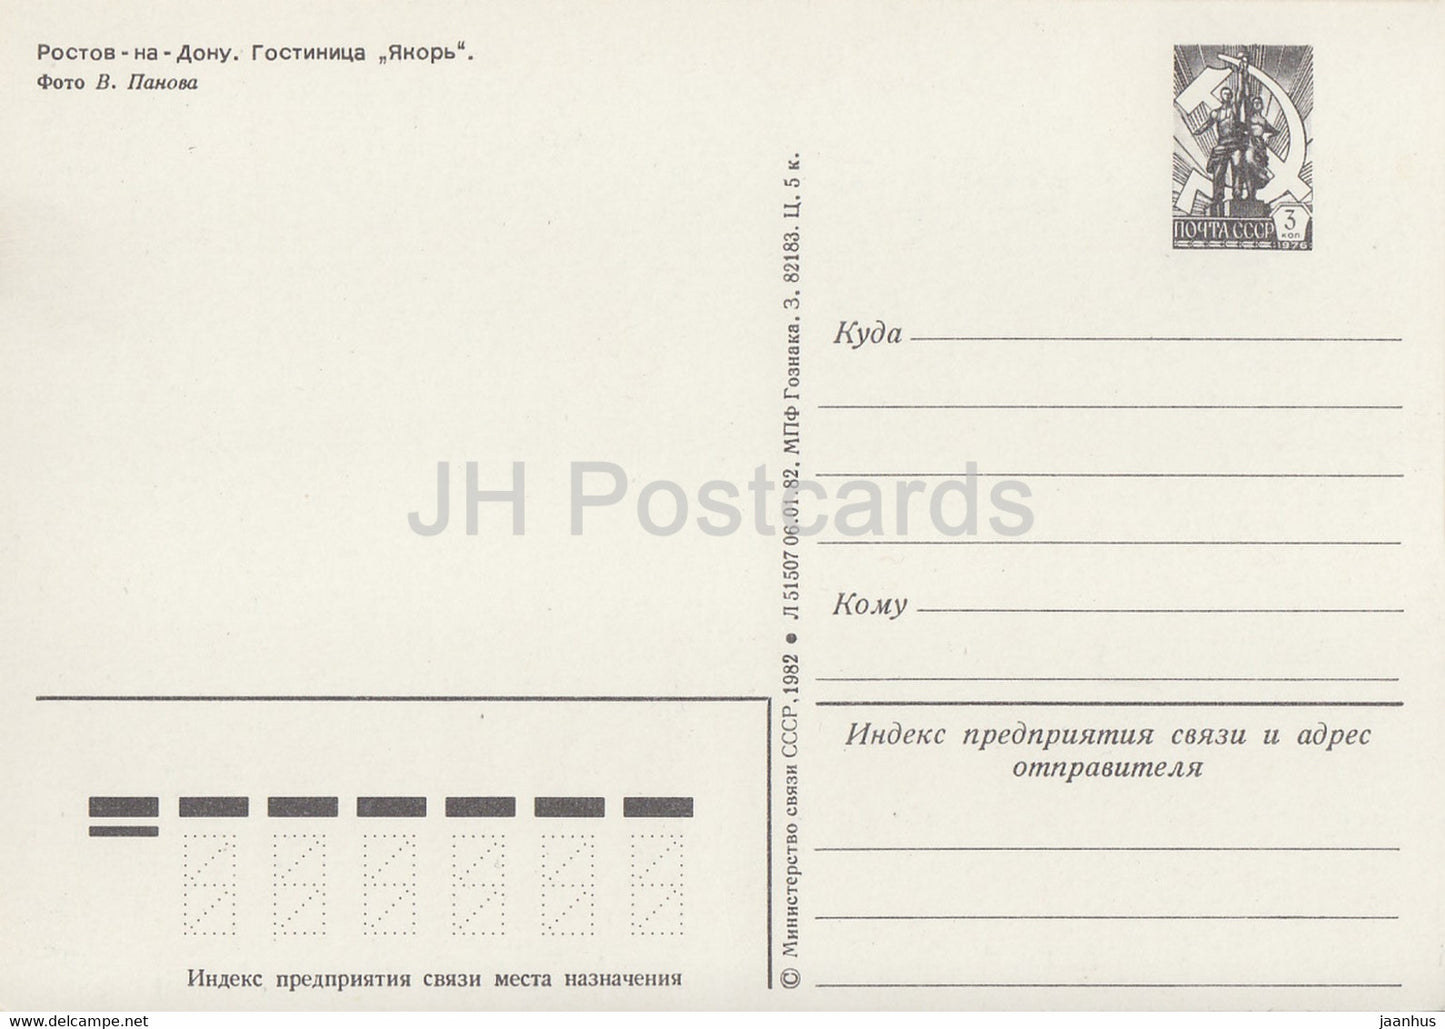 Rostov-on-Don - hotel Yakor (Anchor) - postal stationery - 1982 - Russia USSR - unused